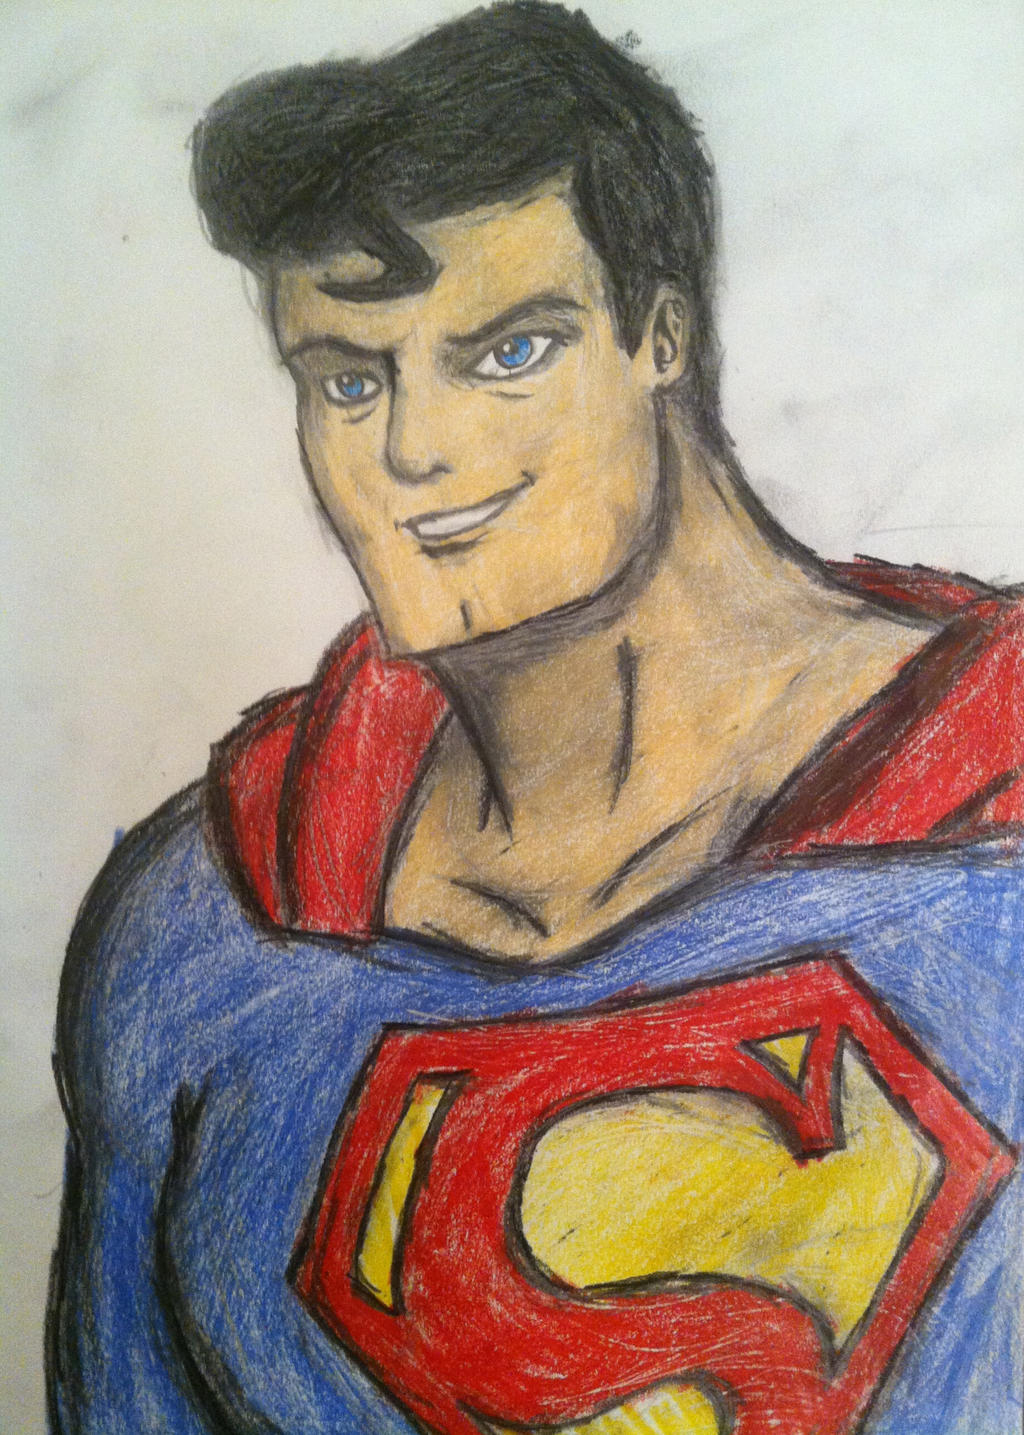 Superman portrait, Bruce Timm style